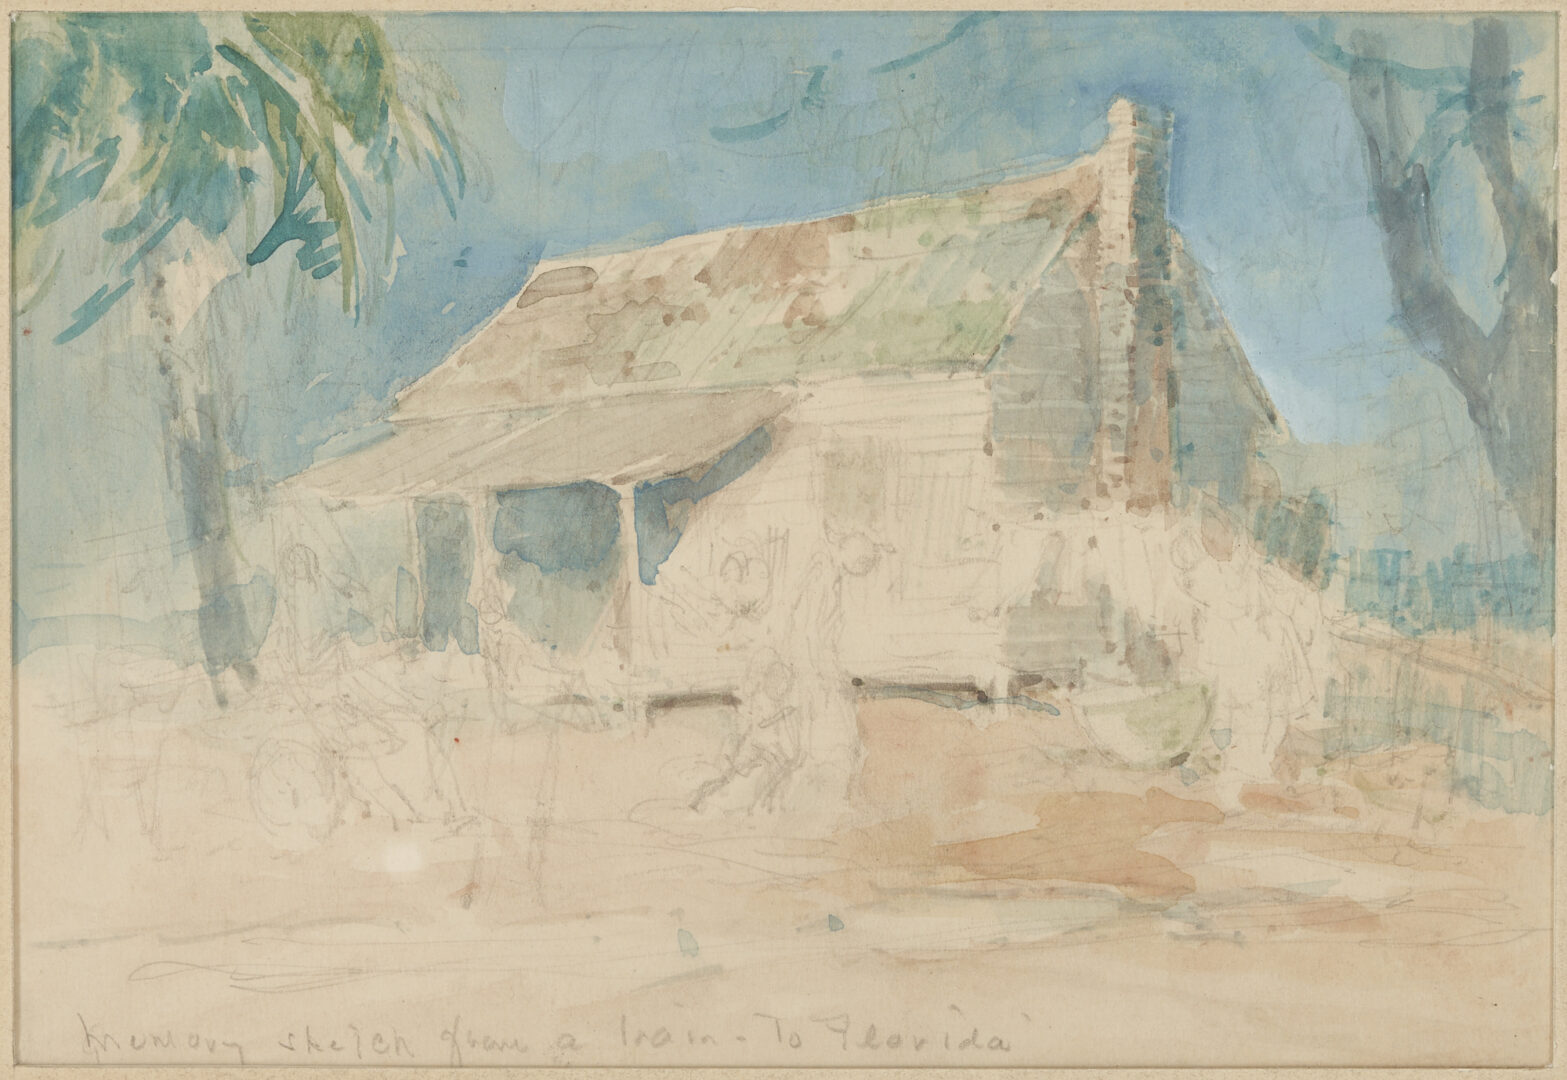 Lot 348: Everett Shinn Watercolor Painting, Southern Landscape